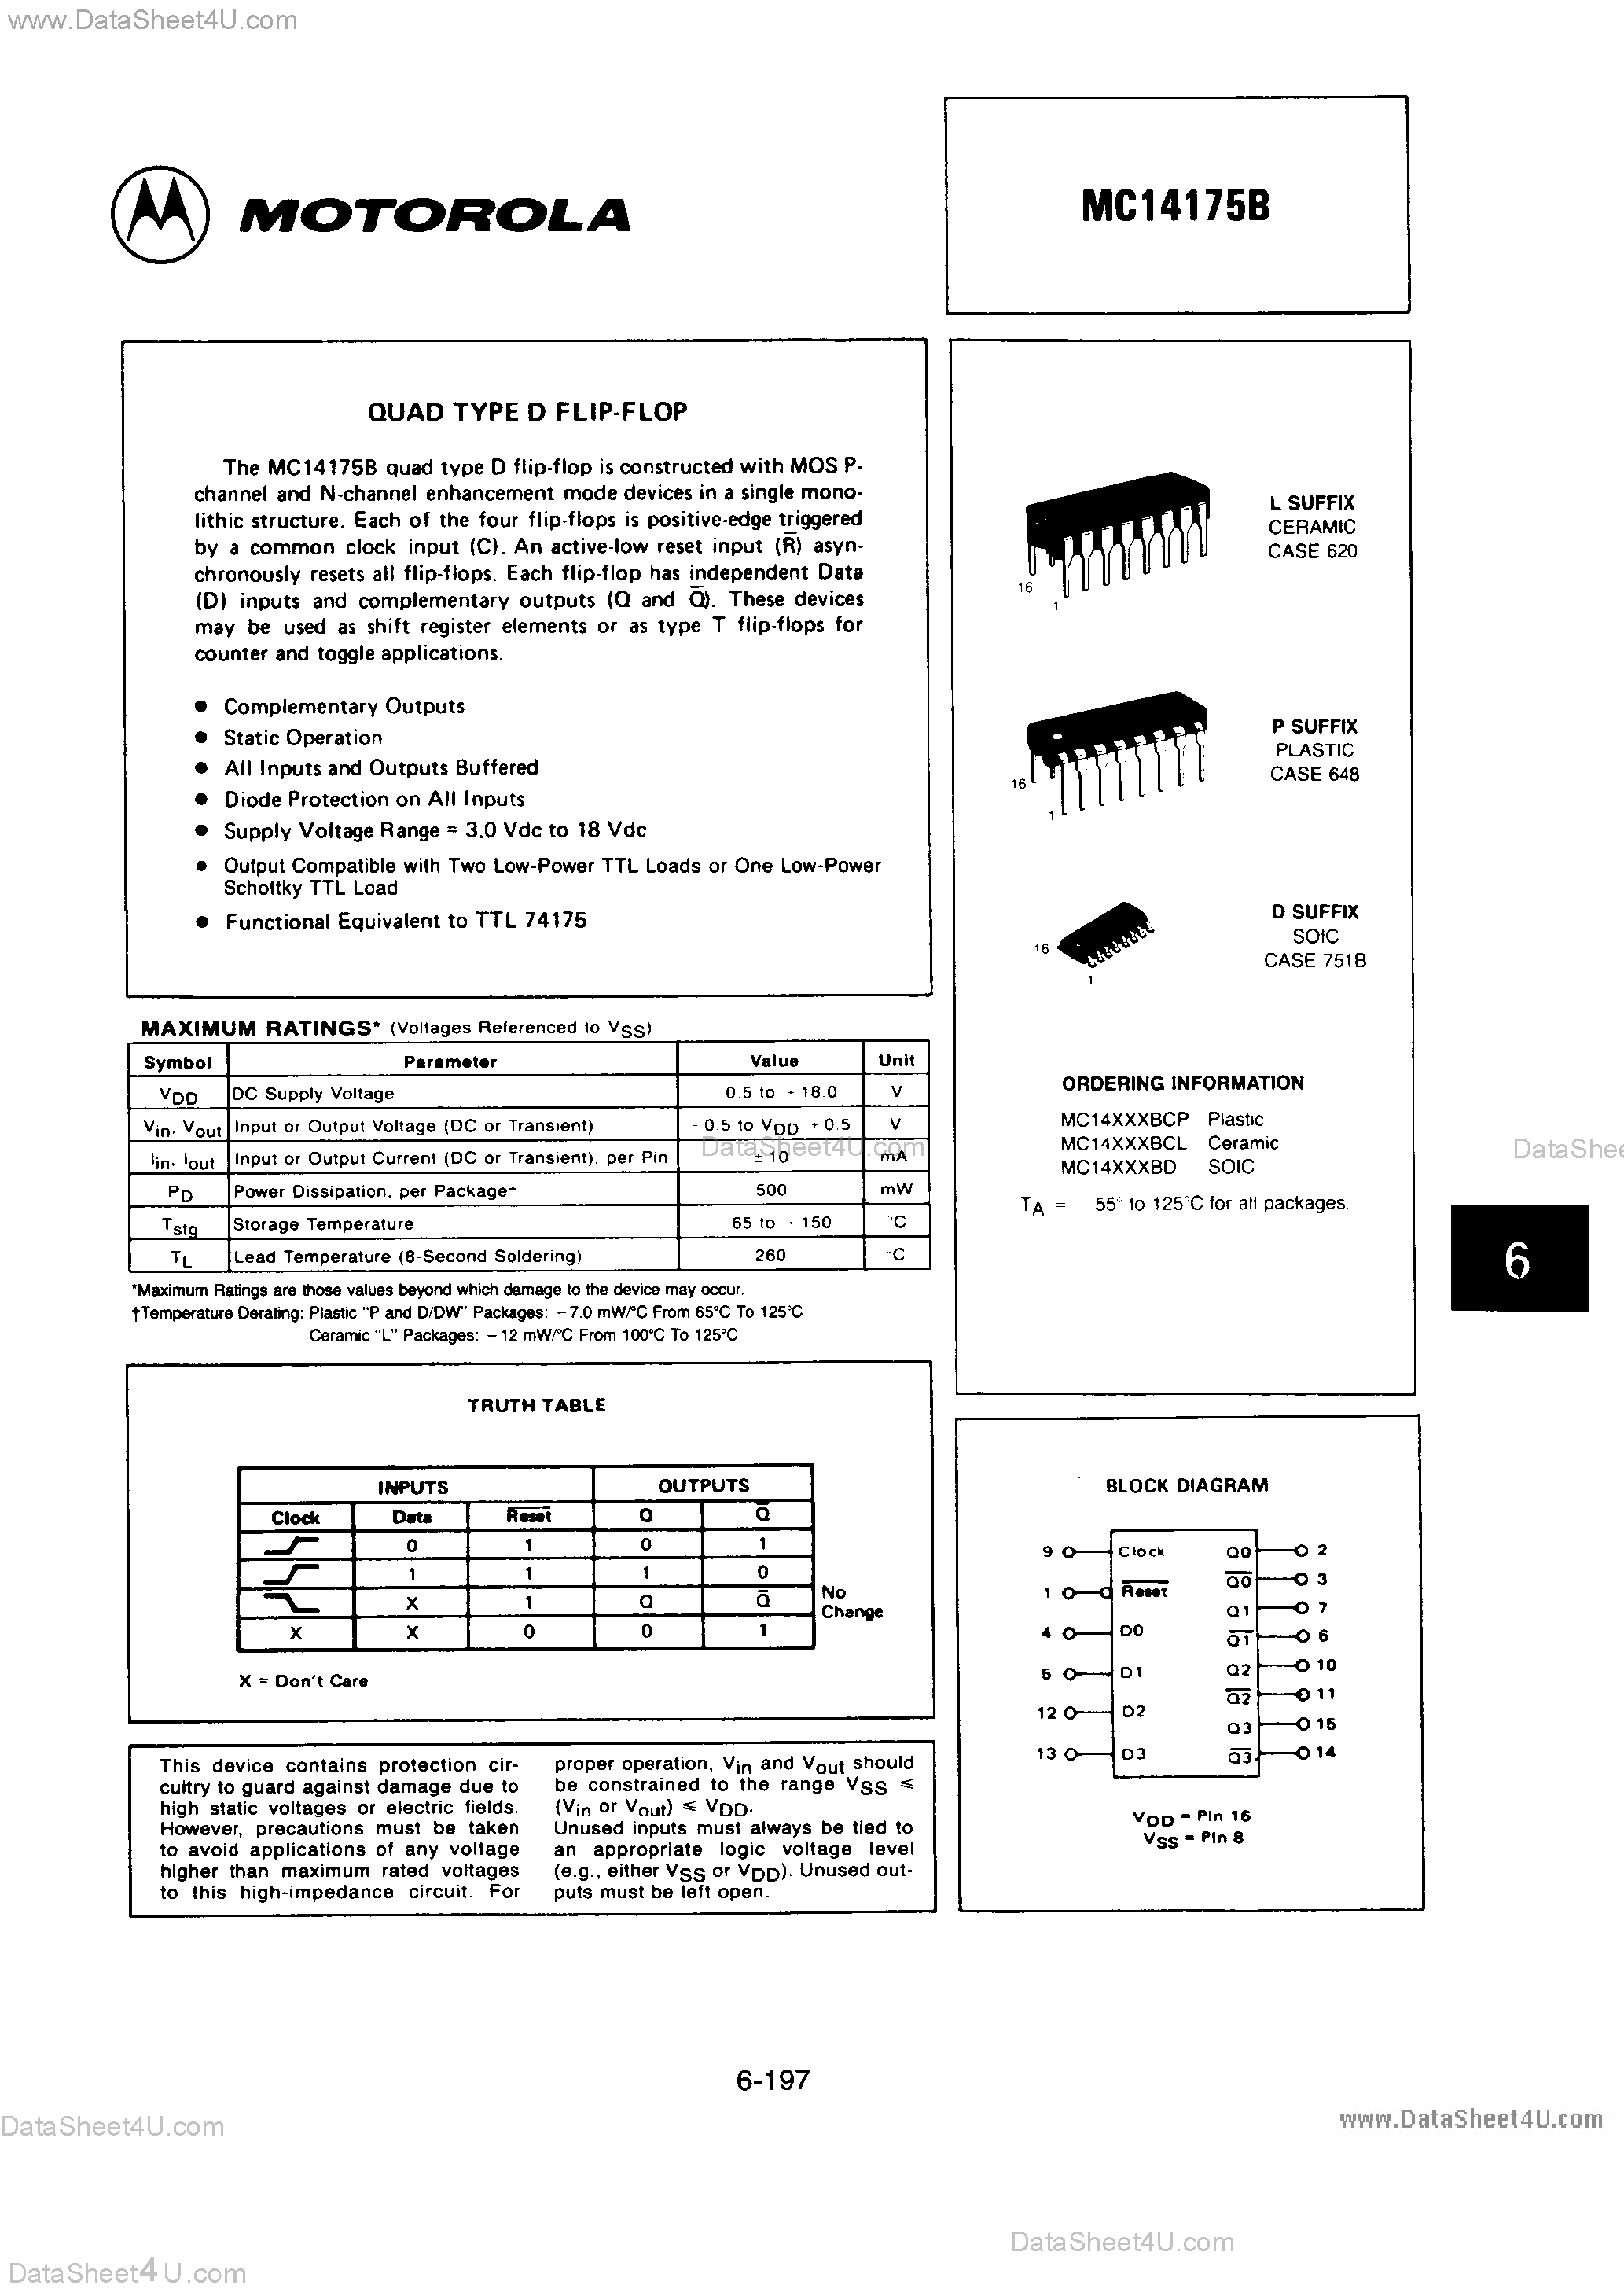 Даташит MC14175B - Quad Type D Flp-Flop страница 1